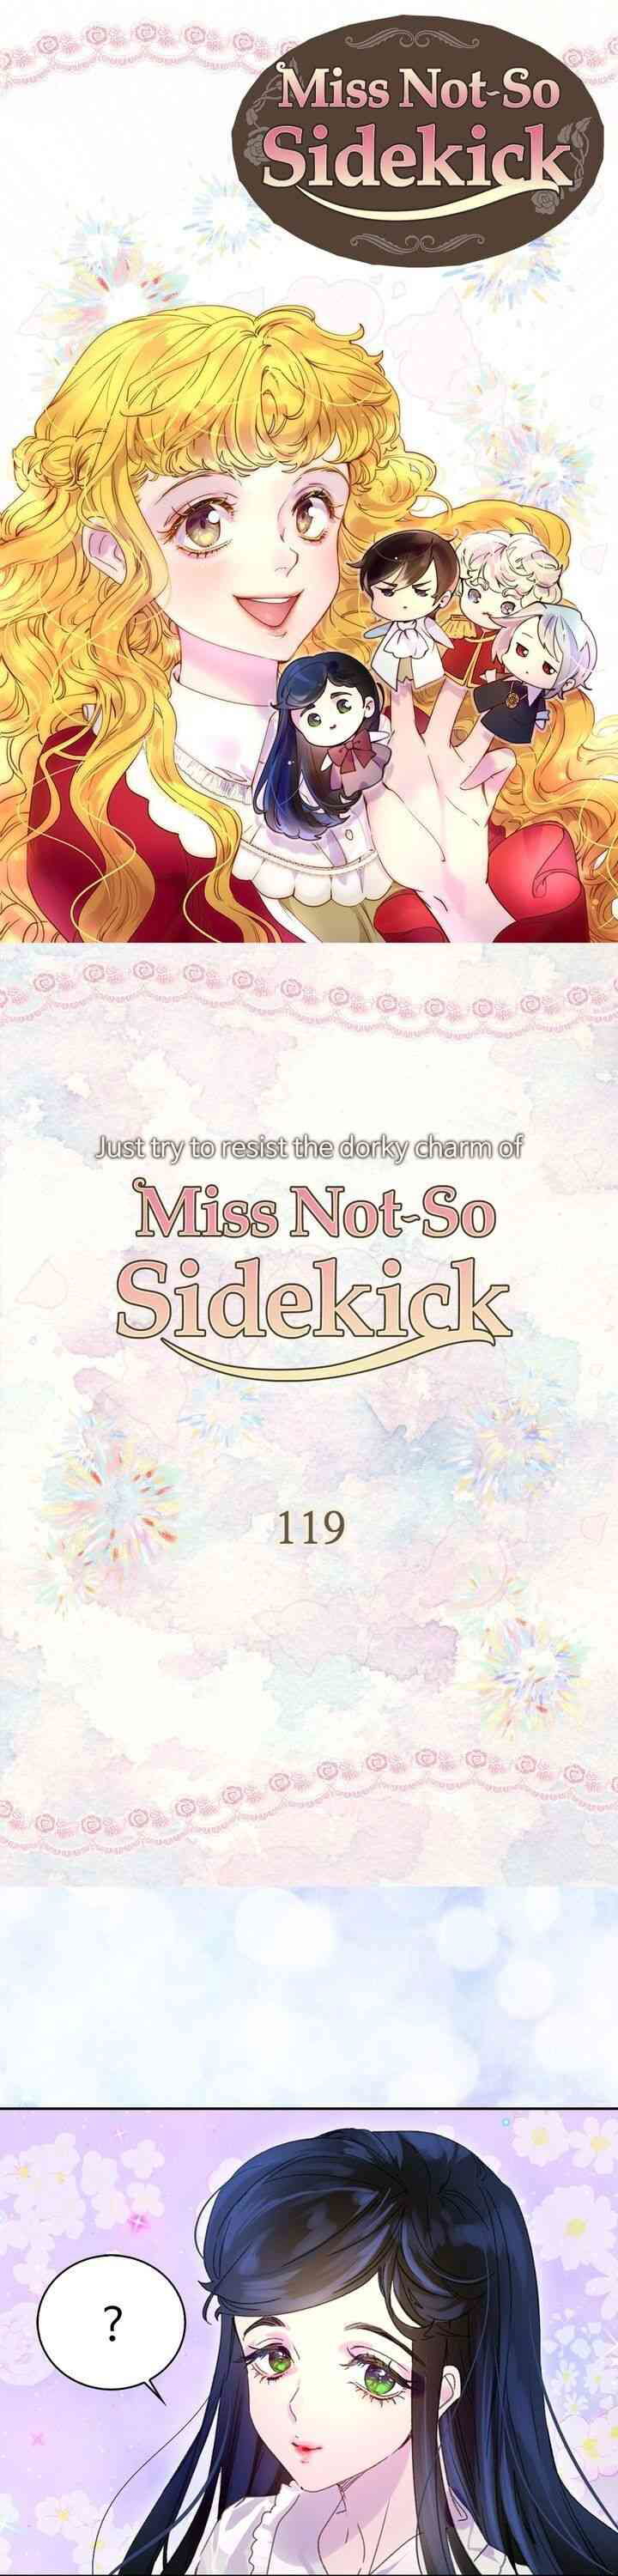 Miss Not-So Sidekick Chapter 119 page 1